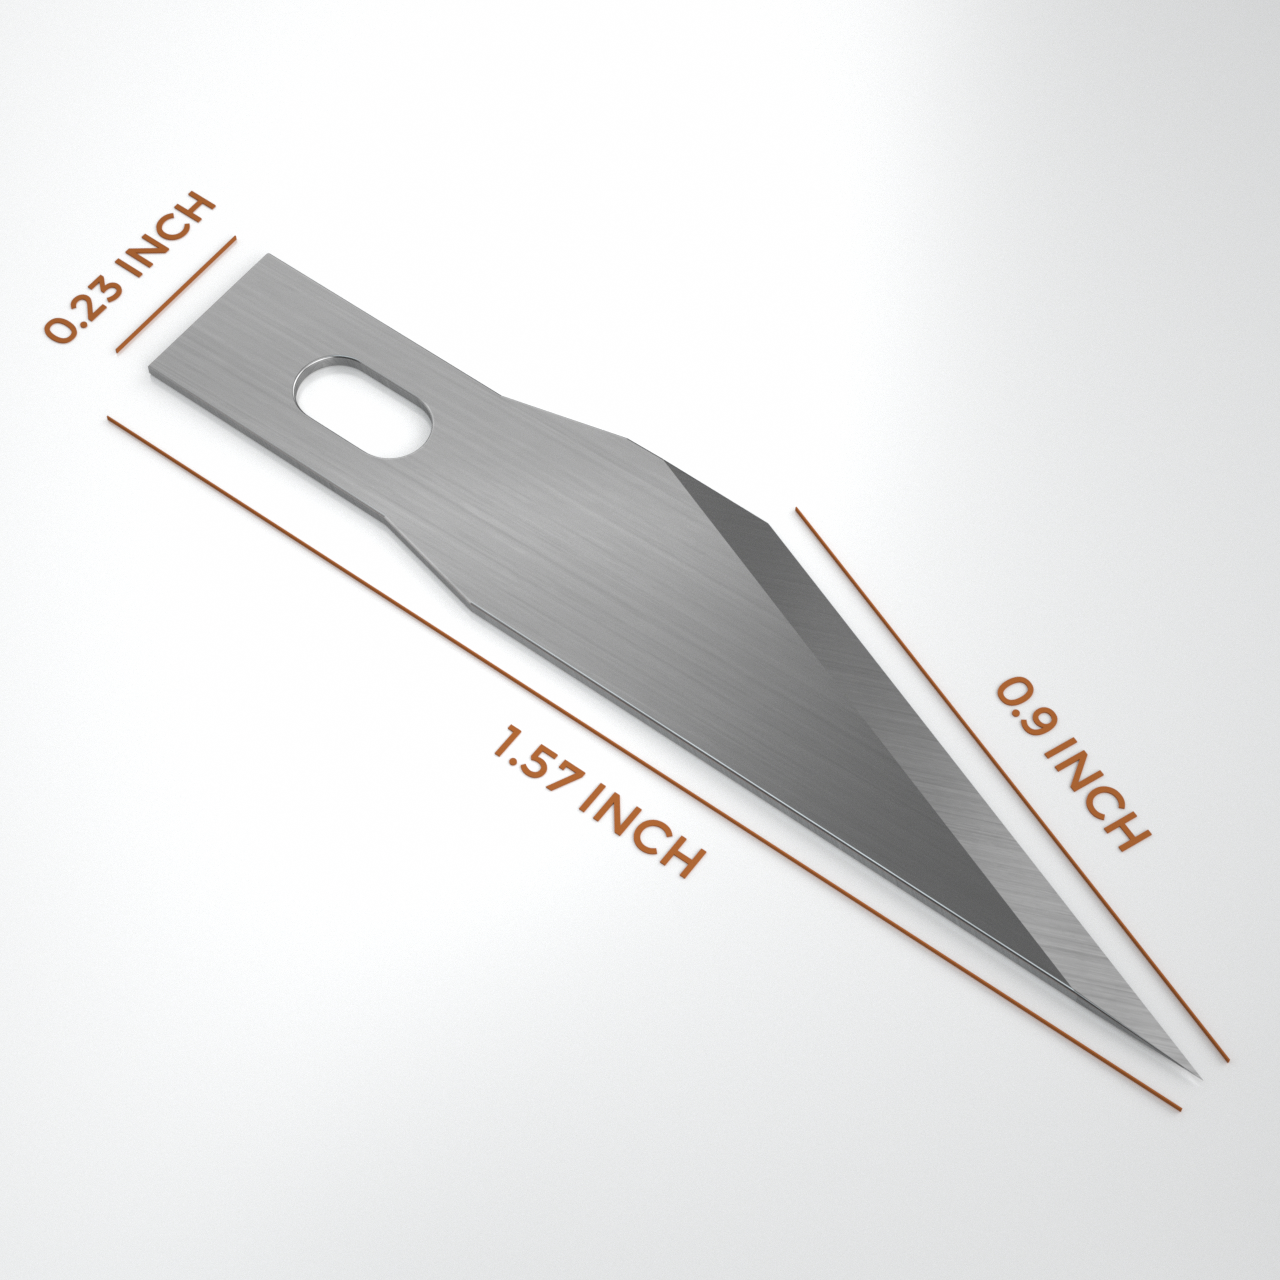 DIYSELF 23 Pack Craft Knife Precision Carving Hobby Knife Kit, 20 Spare Art Knife Blades for Art, Scrapbooking, Stencil